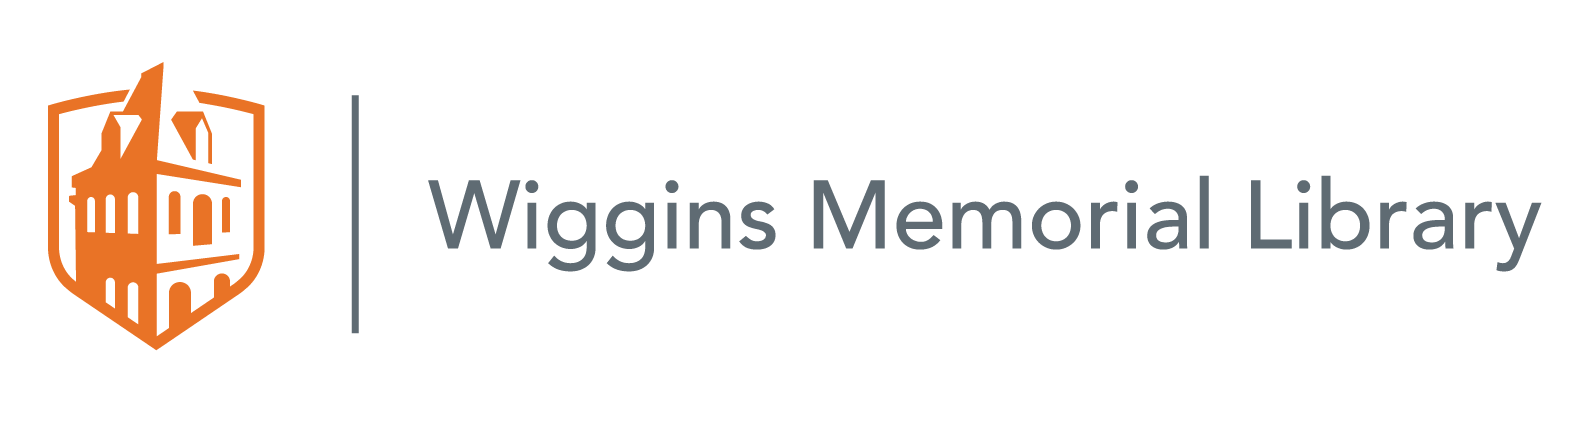 Wiggins Memorial Library Website